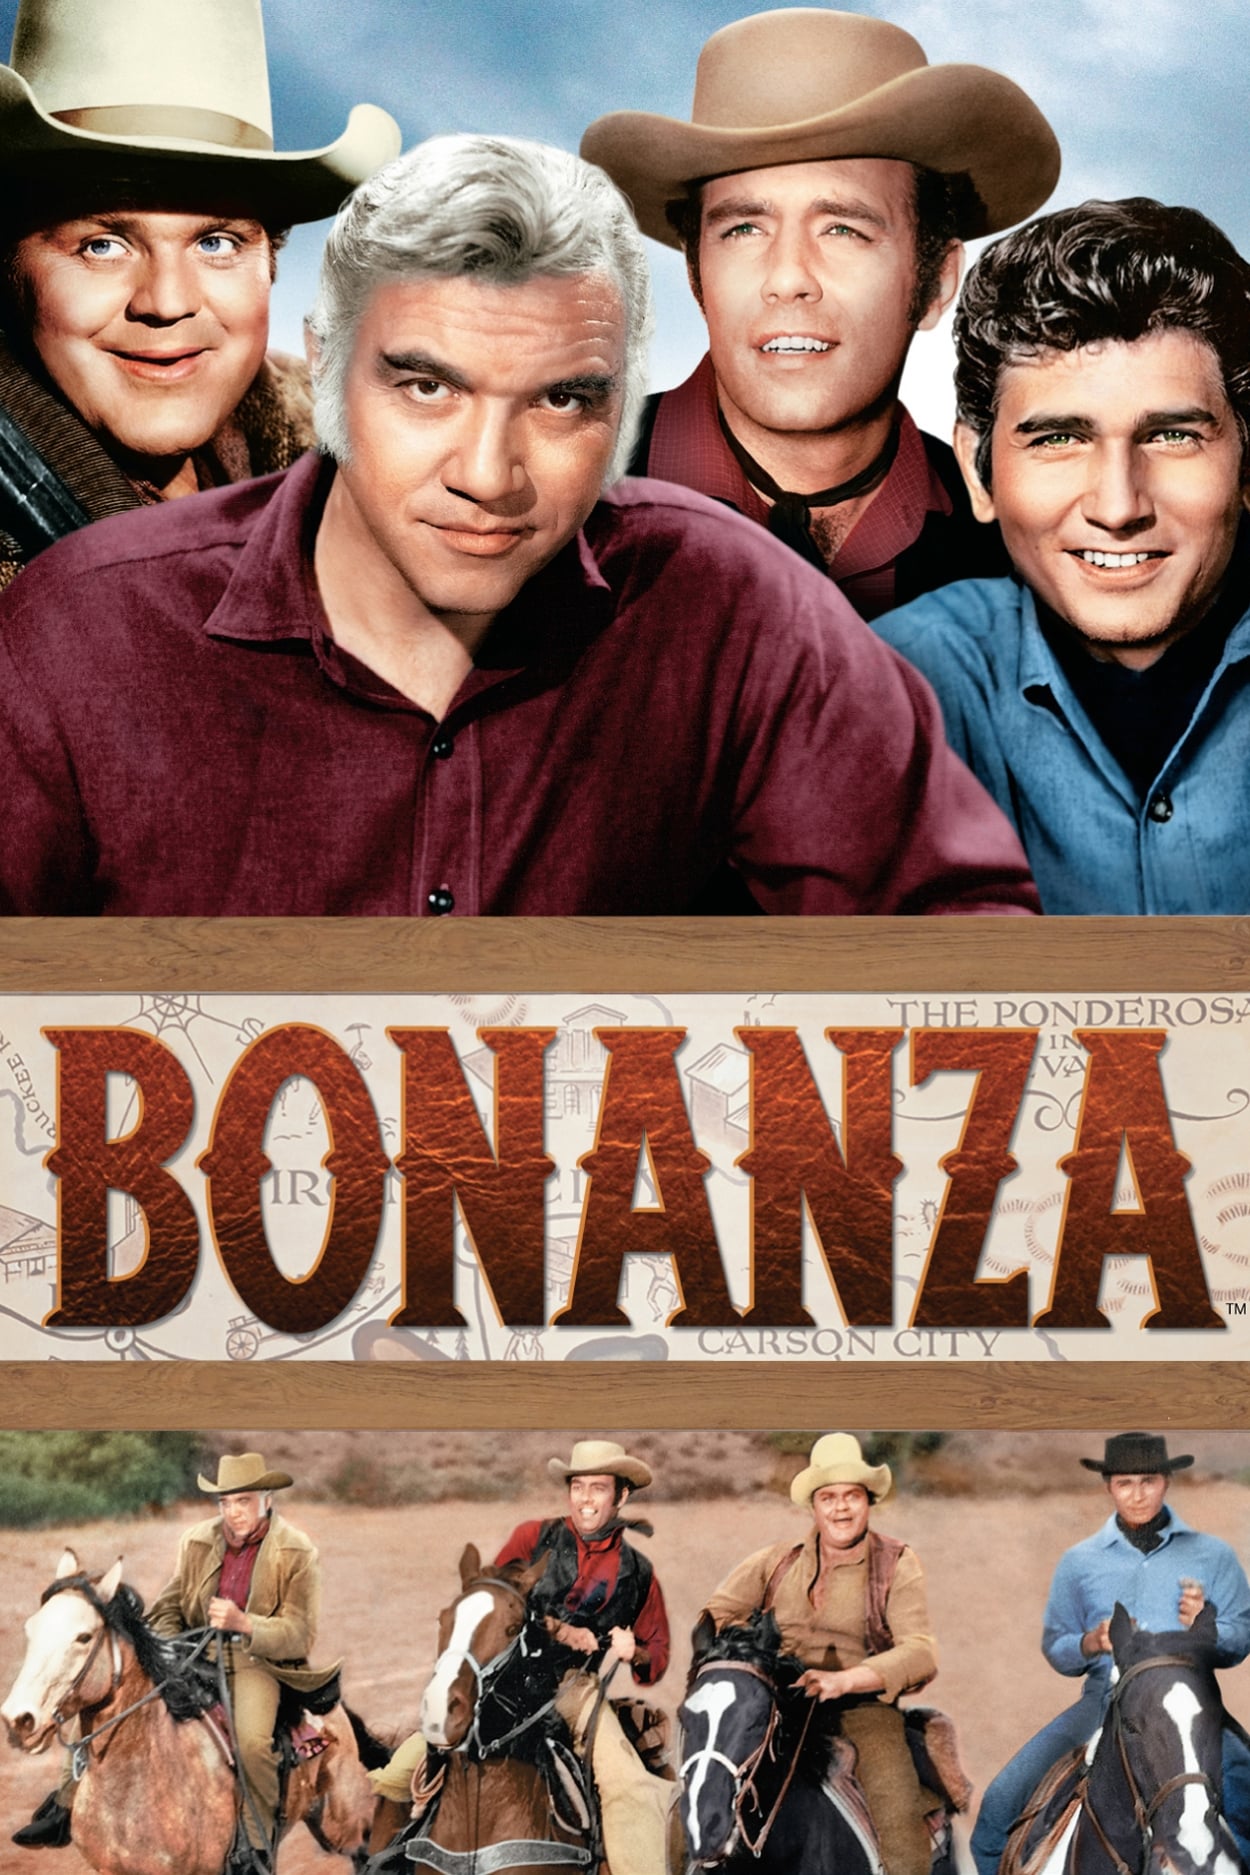 Bonanza on FREECABLE TV